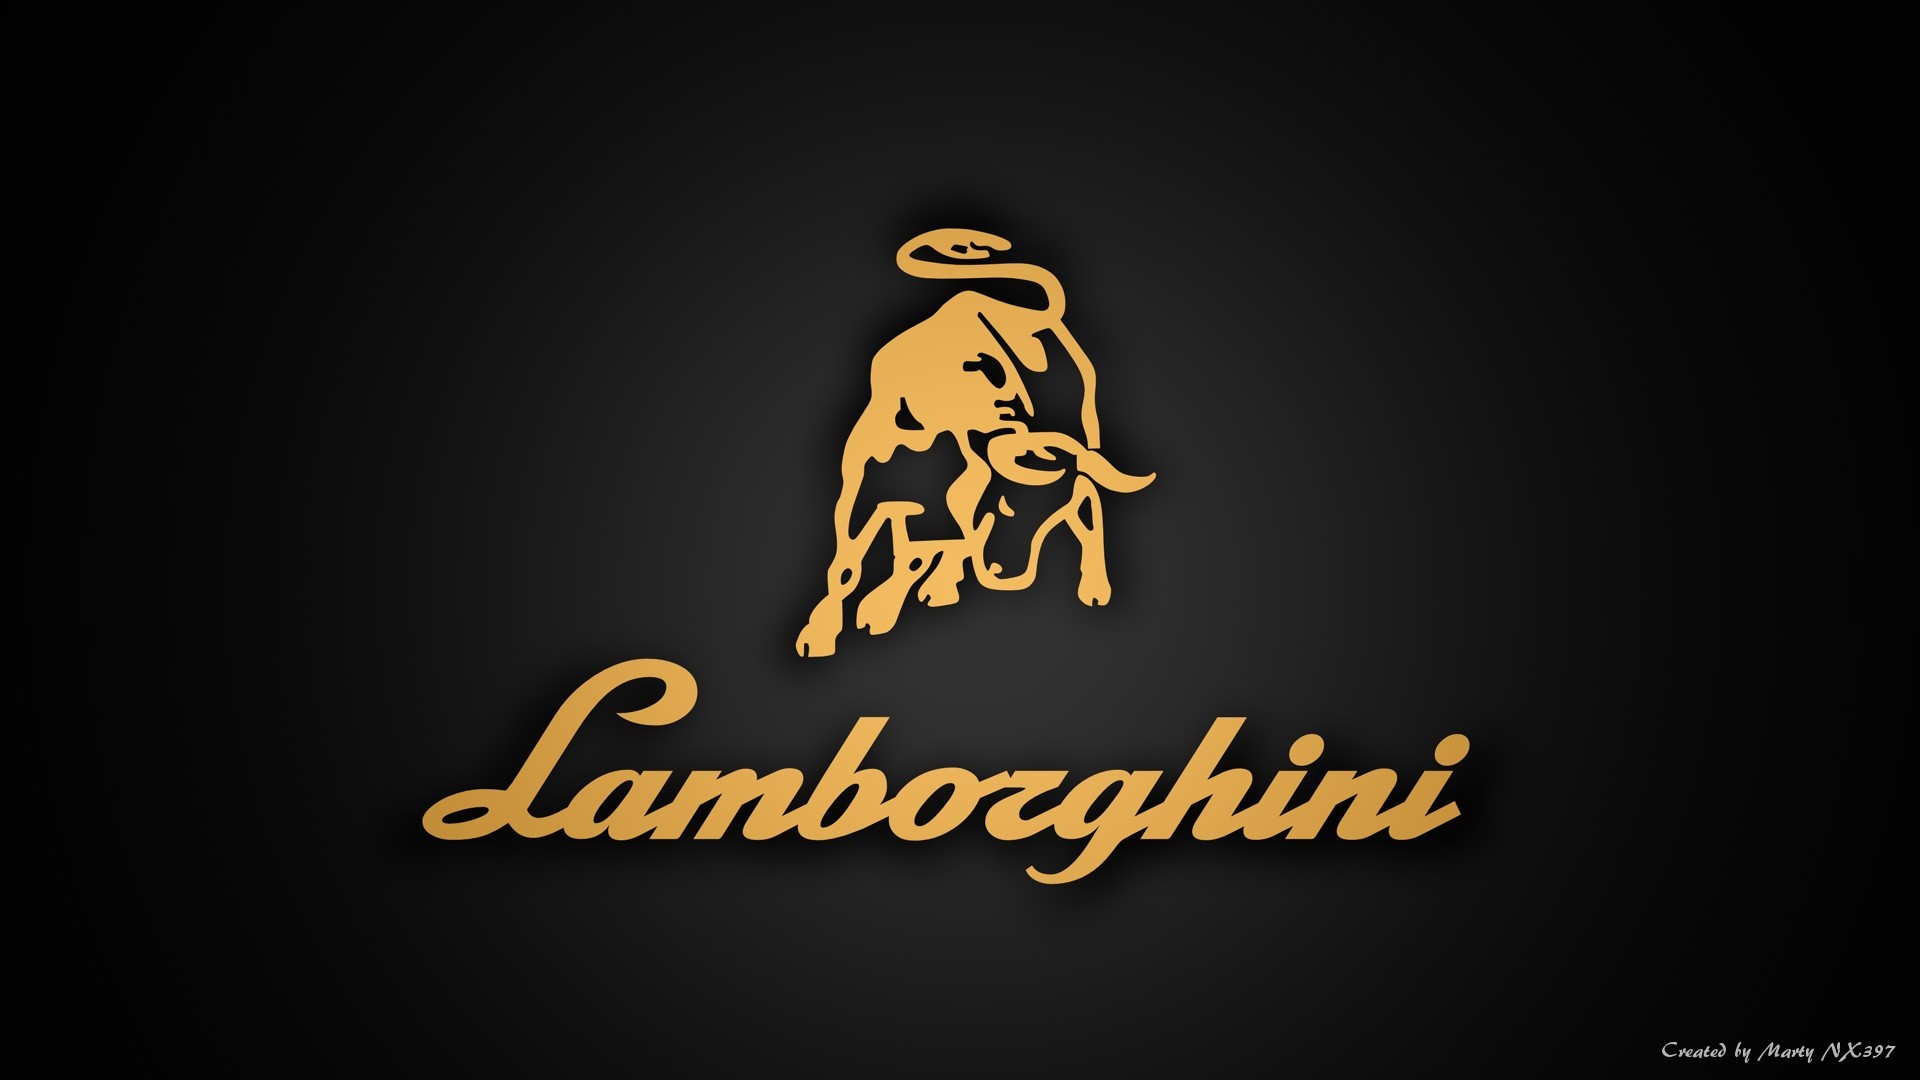 1920x1080 hd lamborghini logo Pictures Of Cars Hd 640Ã1136 Lamborghini Logo Wallpaper  (51 Wallpapers